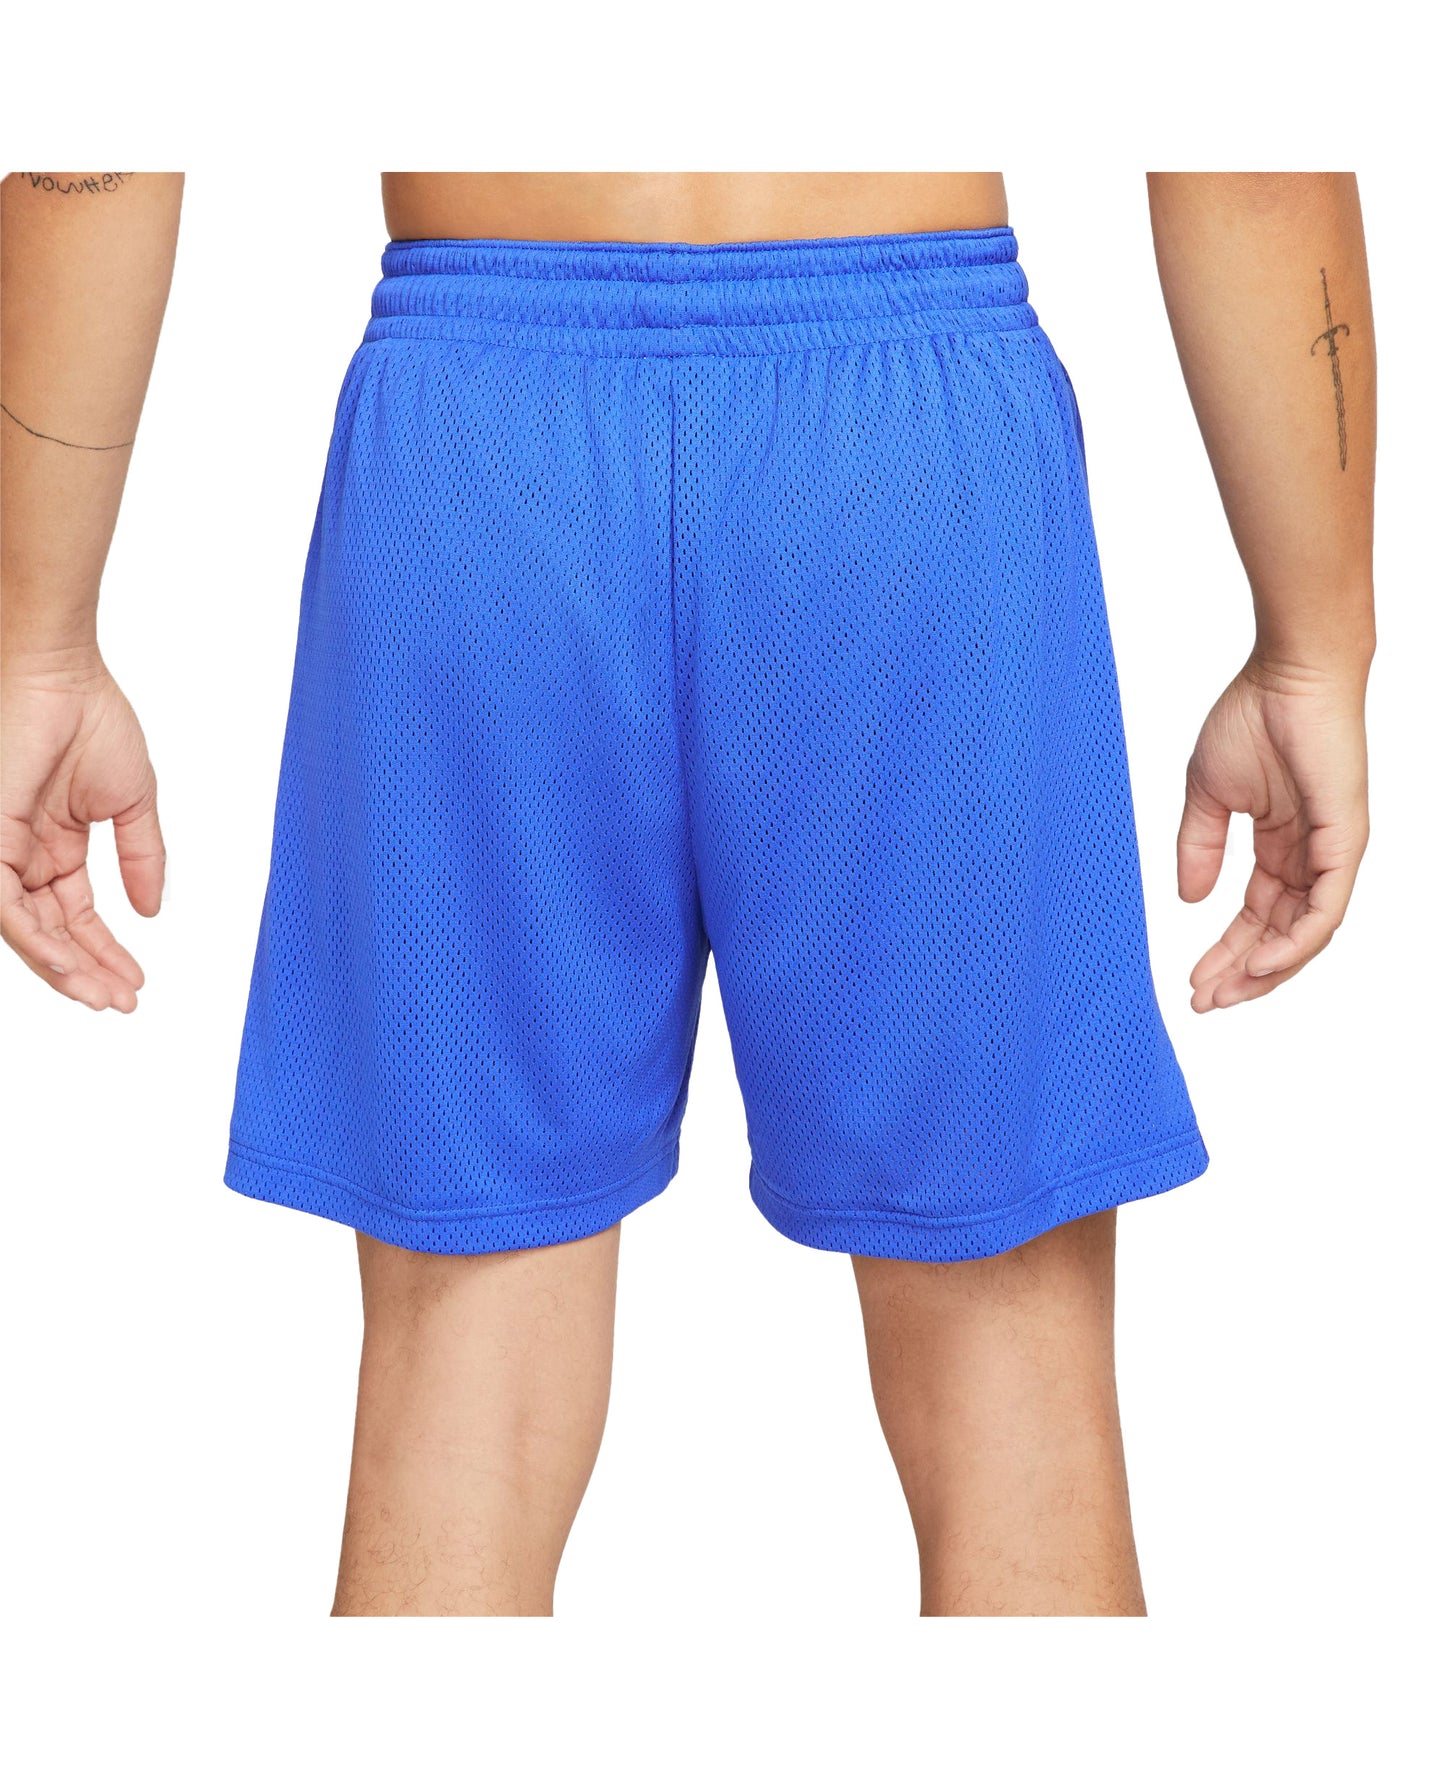 
                    
                      Nike Dri-Fit Shorts Game Royal
                    
                  